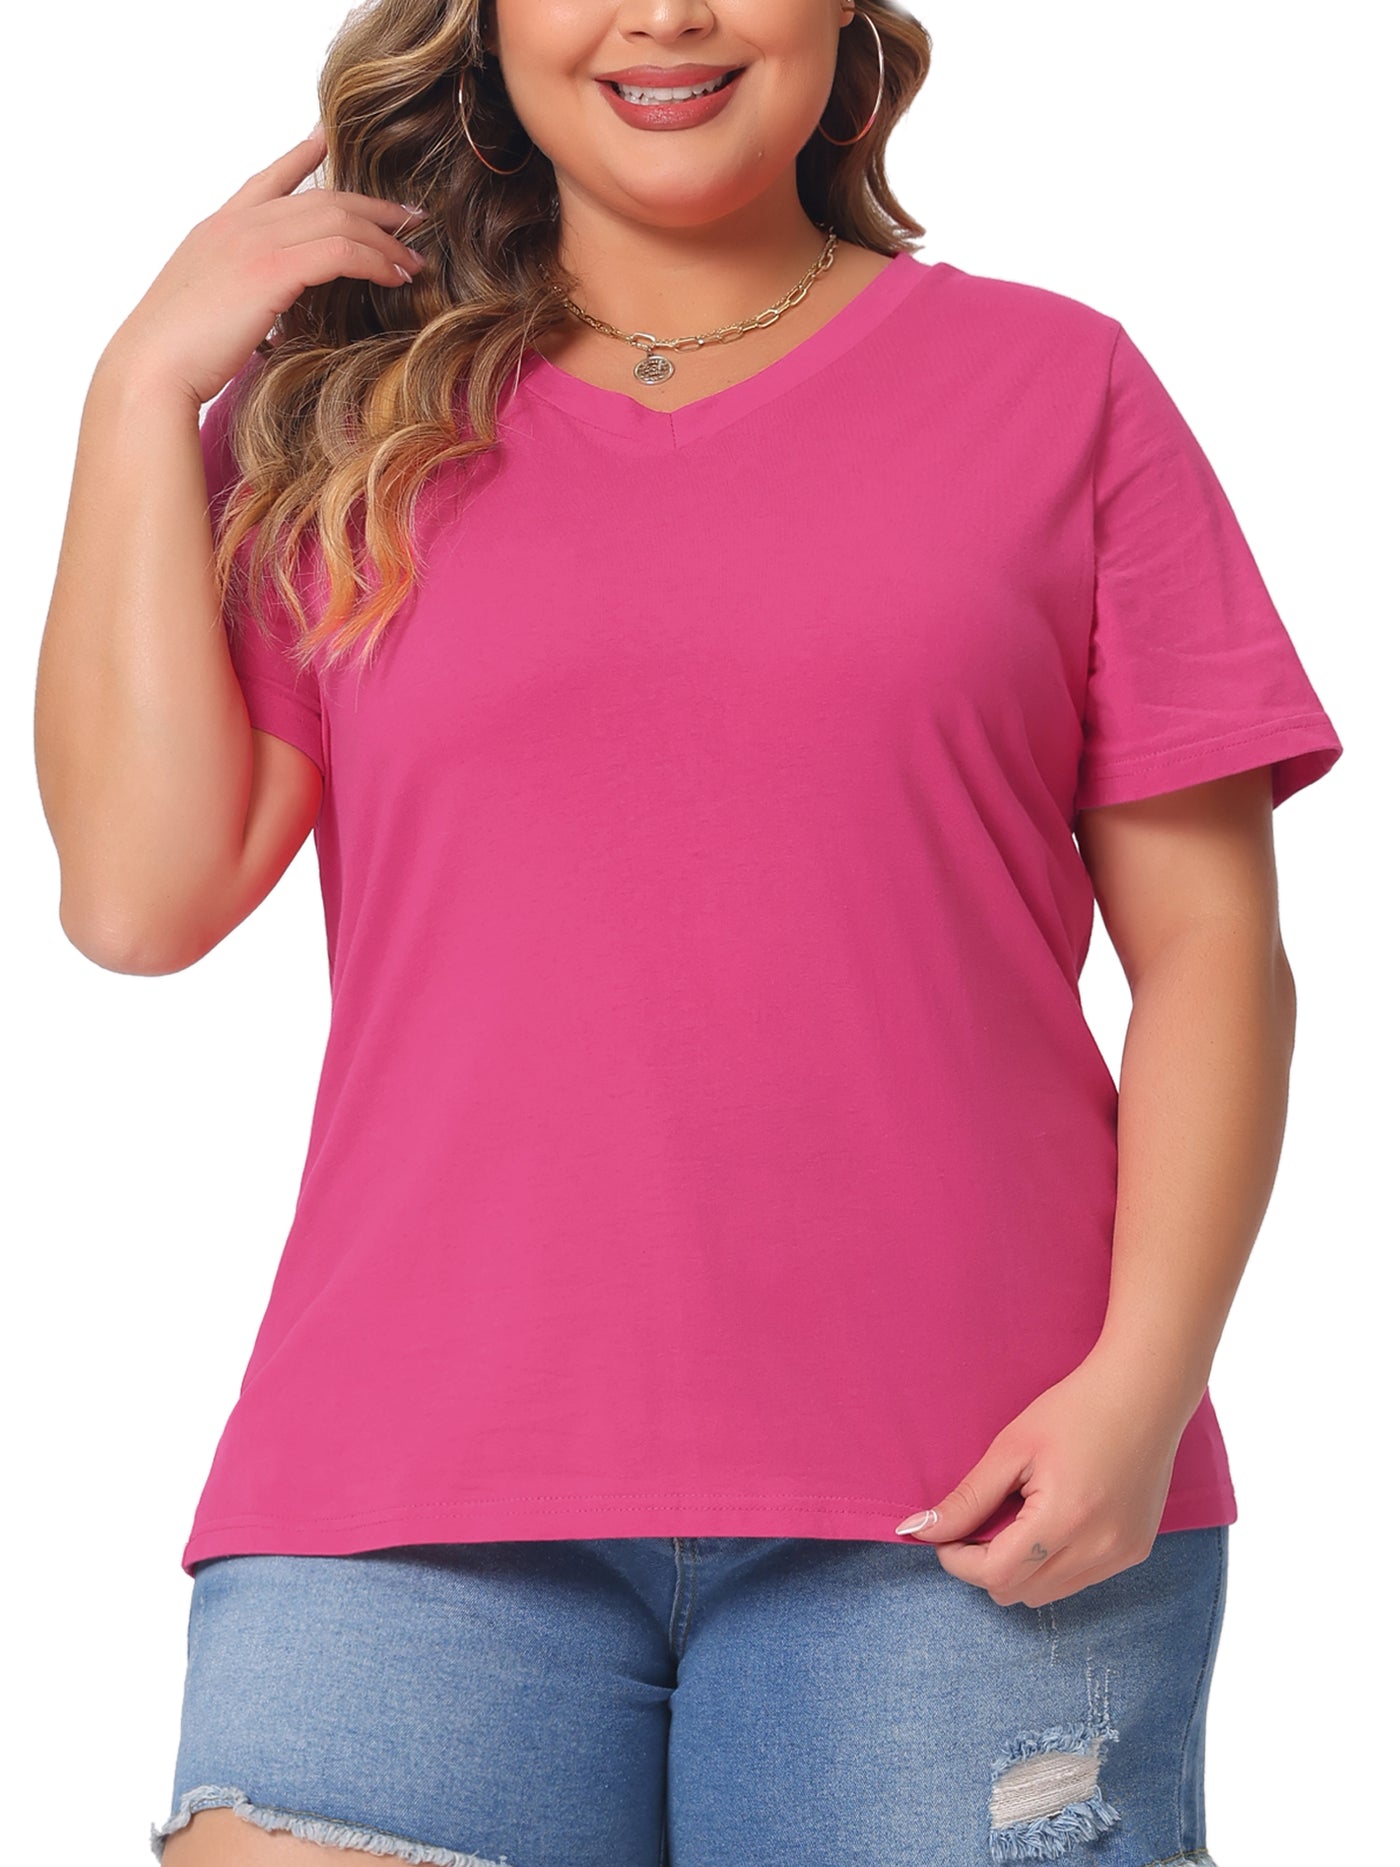 Bublédon Plus Size T Shirts for Women Basic V Neck Short Sleeve Tops